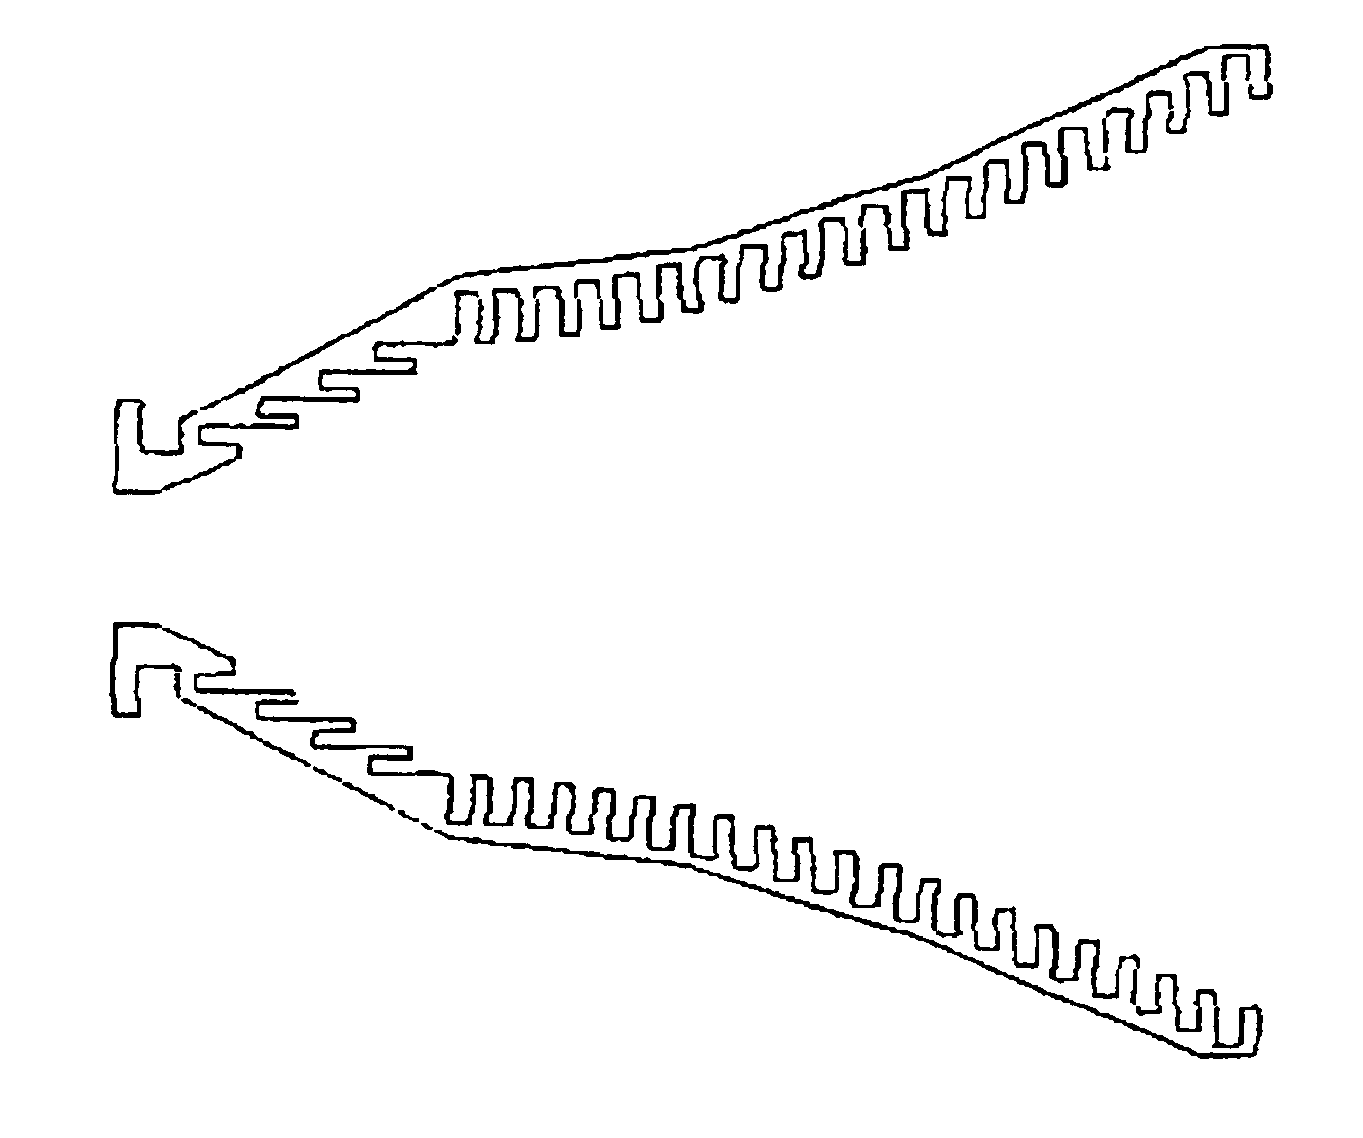 Horn antenna combining horizontal and vertical ridges